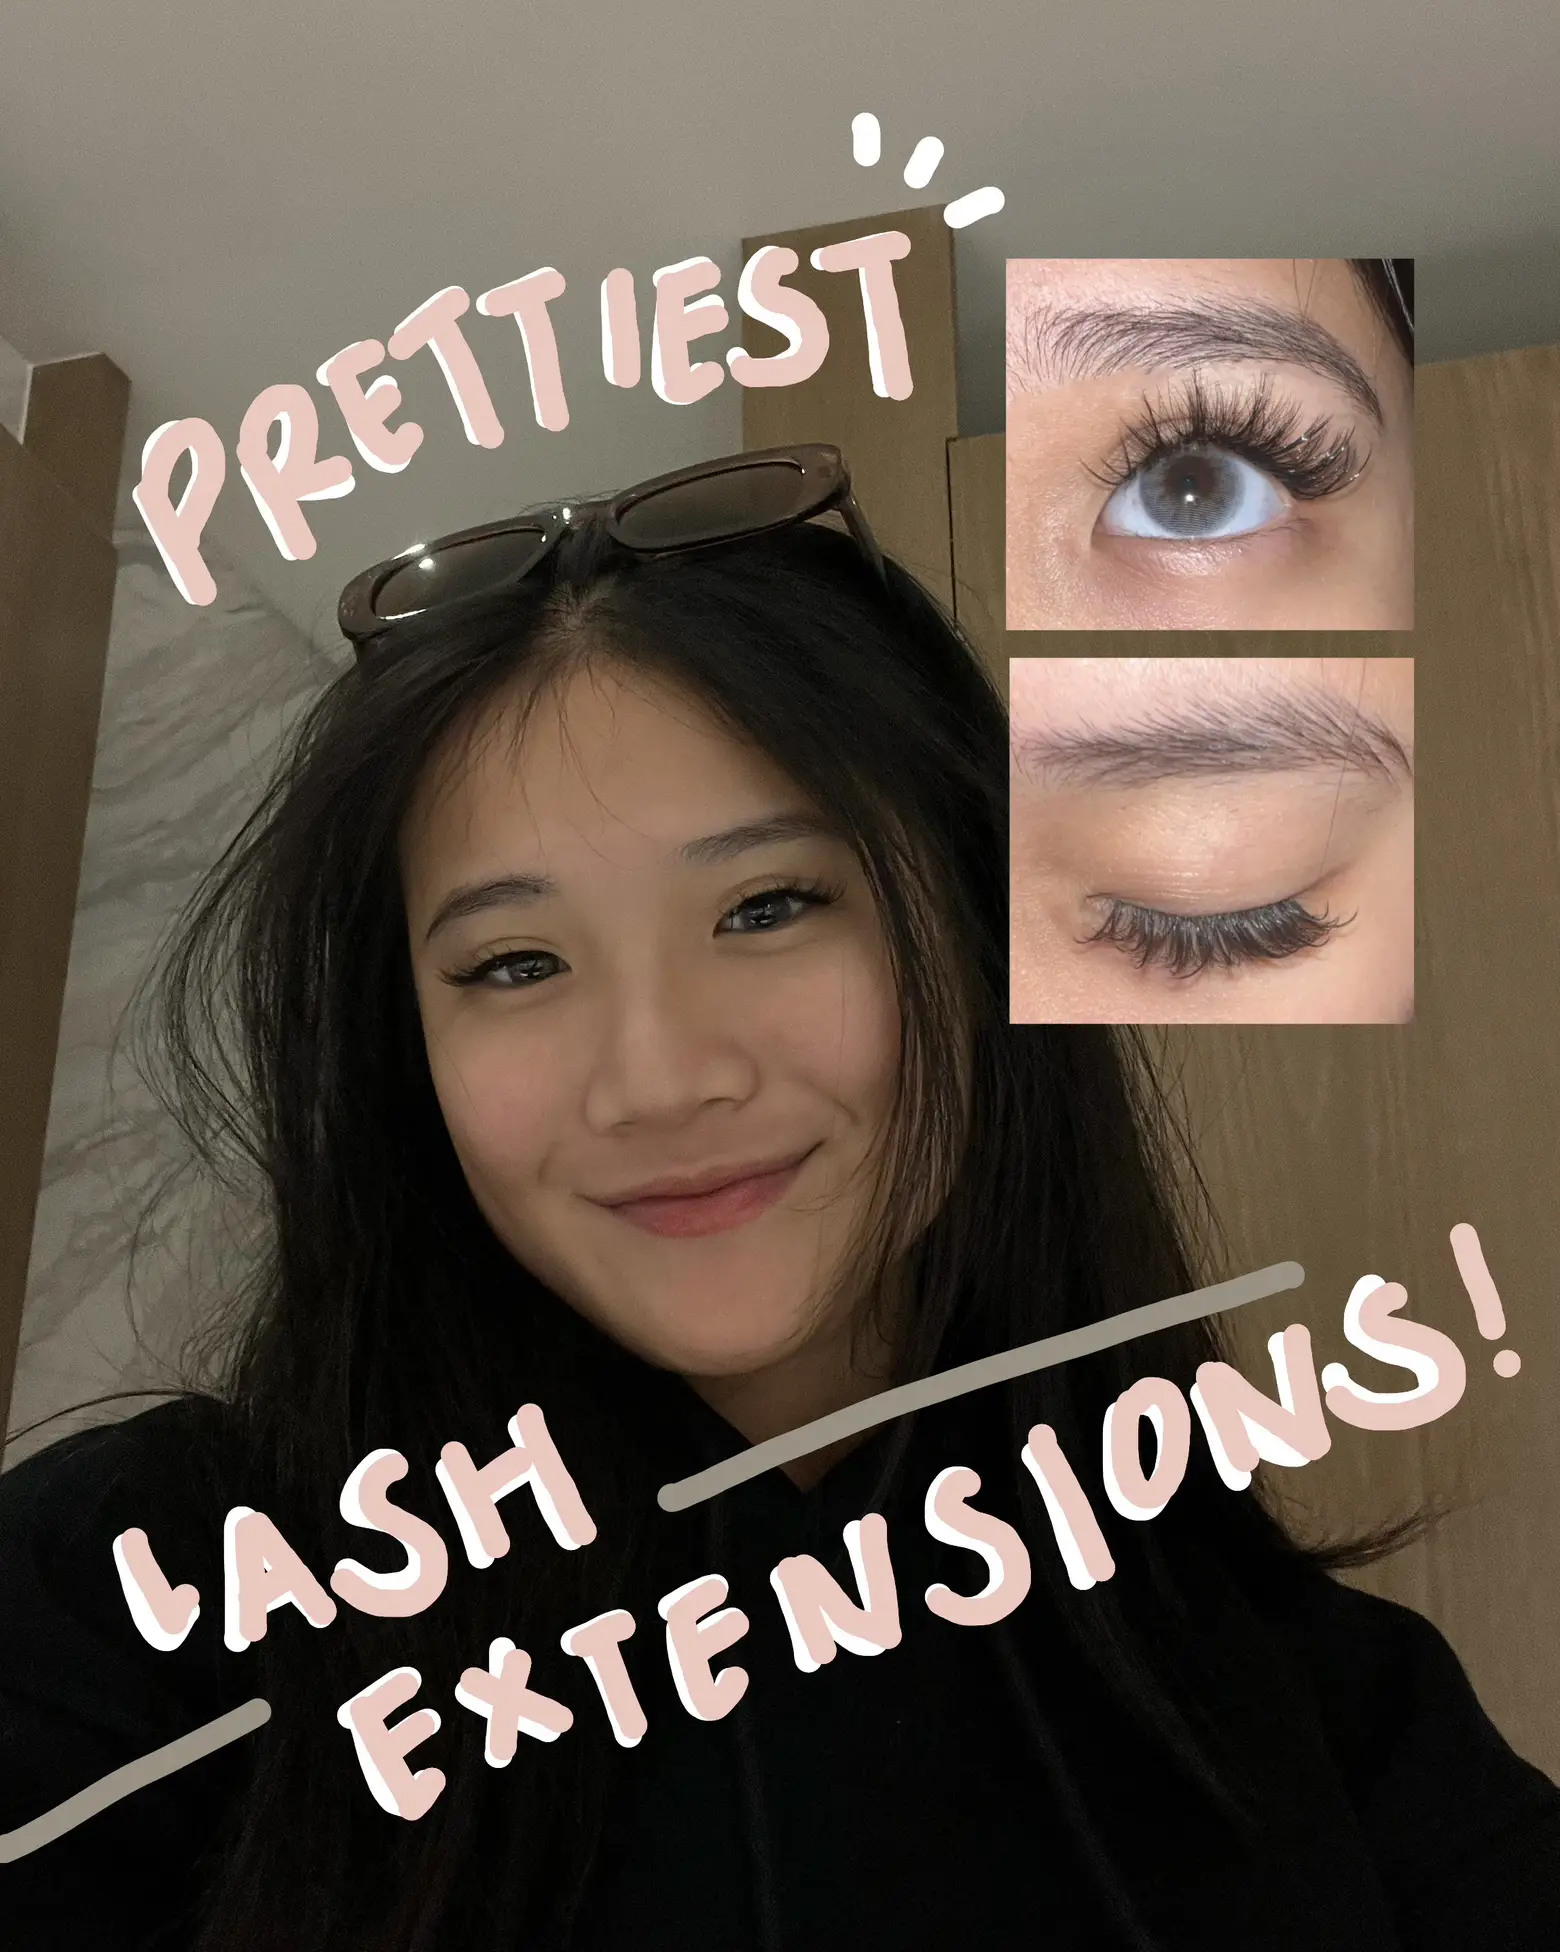 Blossom Beauty, $55 Eyelash Extension Offer